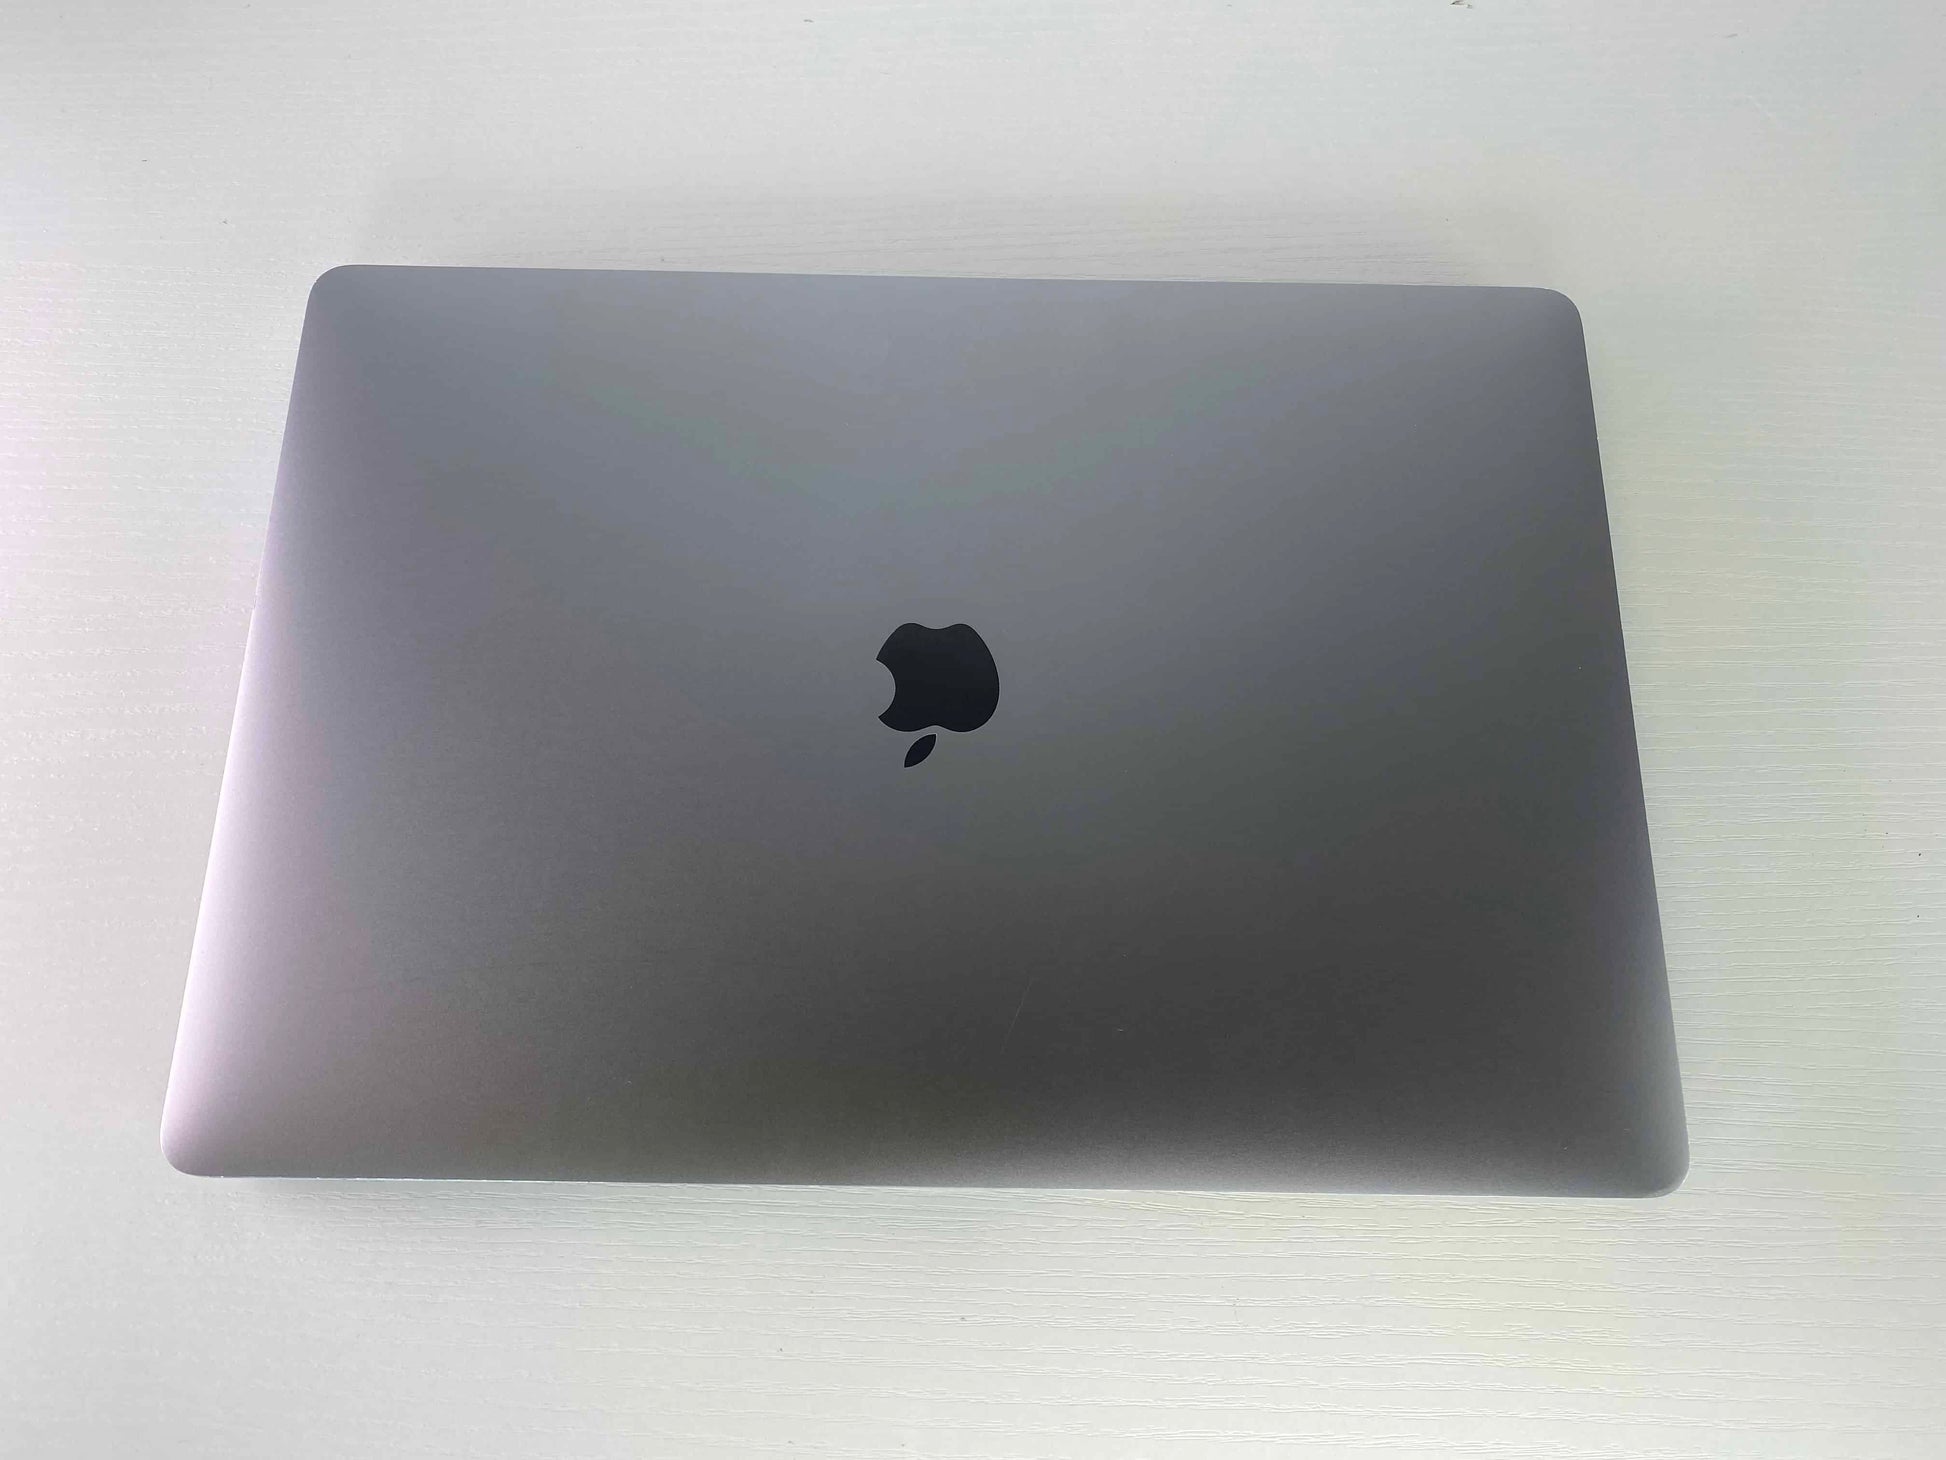 Apple MacBook Pro (15-inch 2018) 2.8GHz i7 16GB RAM 512GB SSD AMD 555X GPU